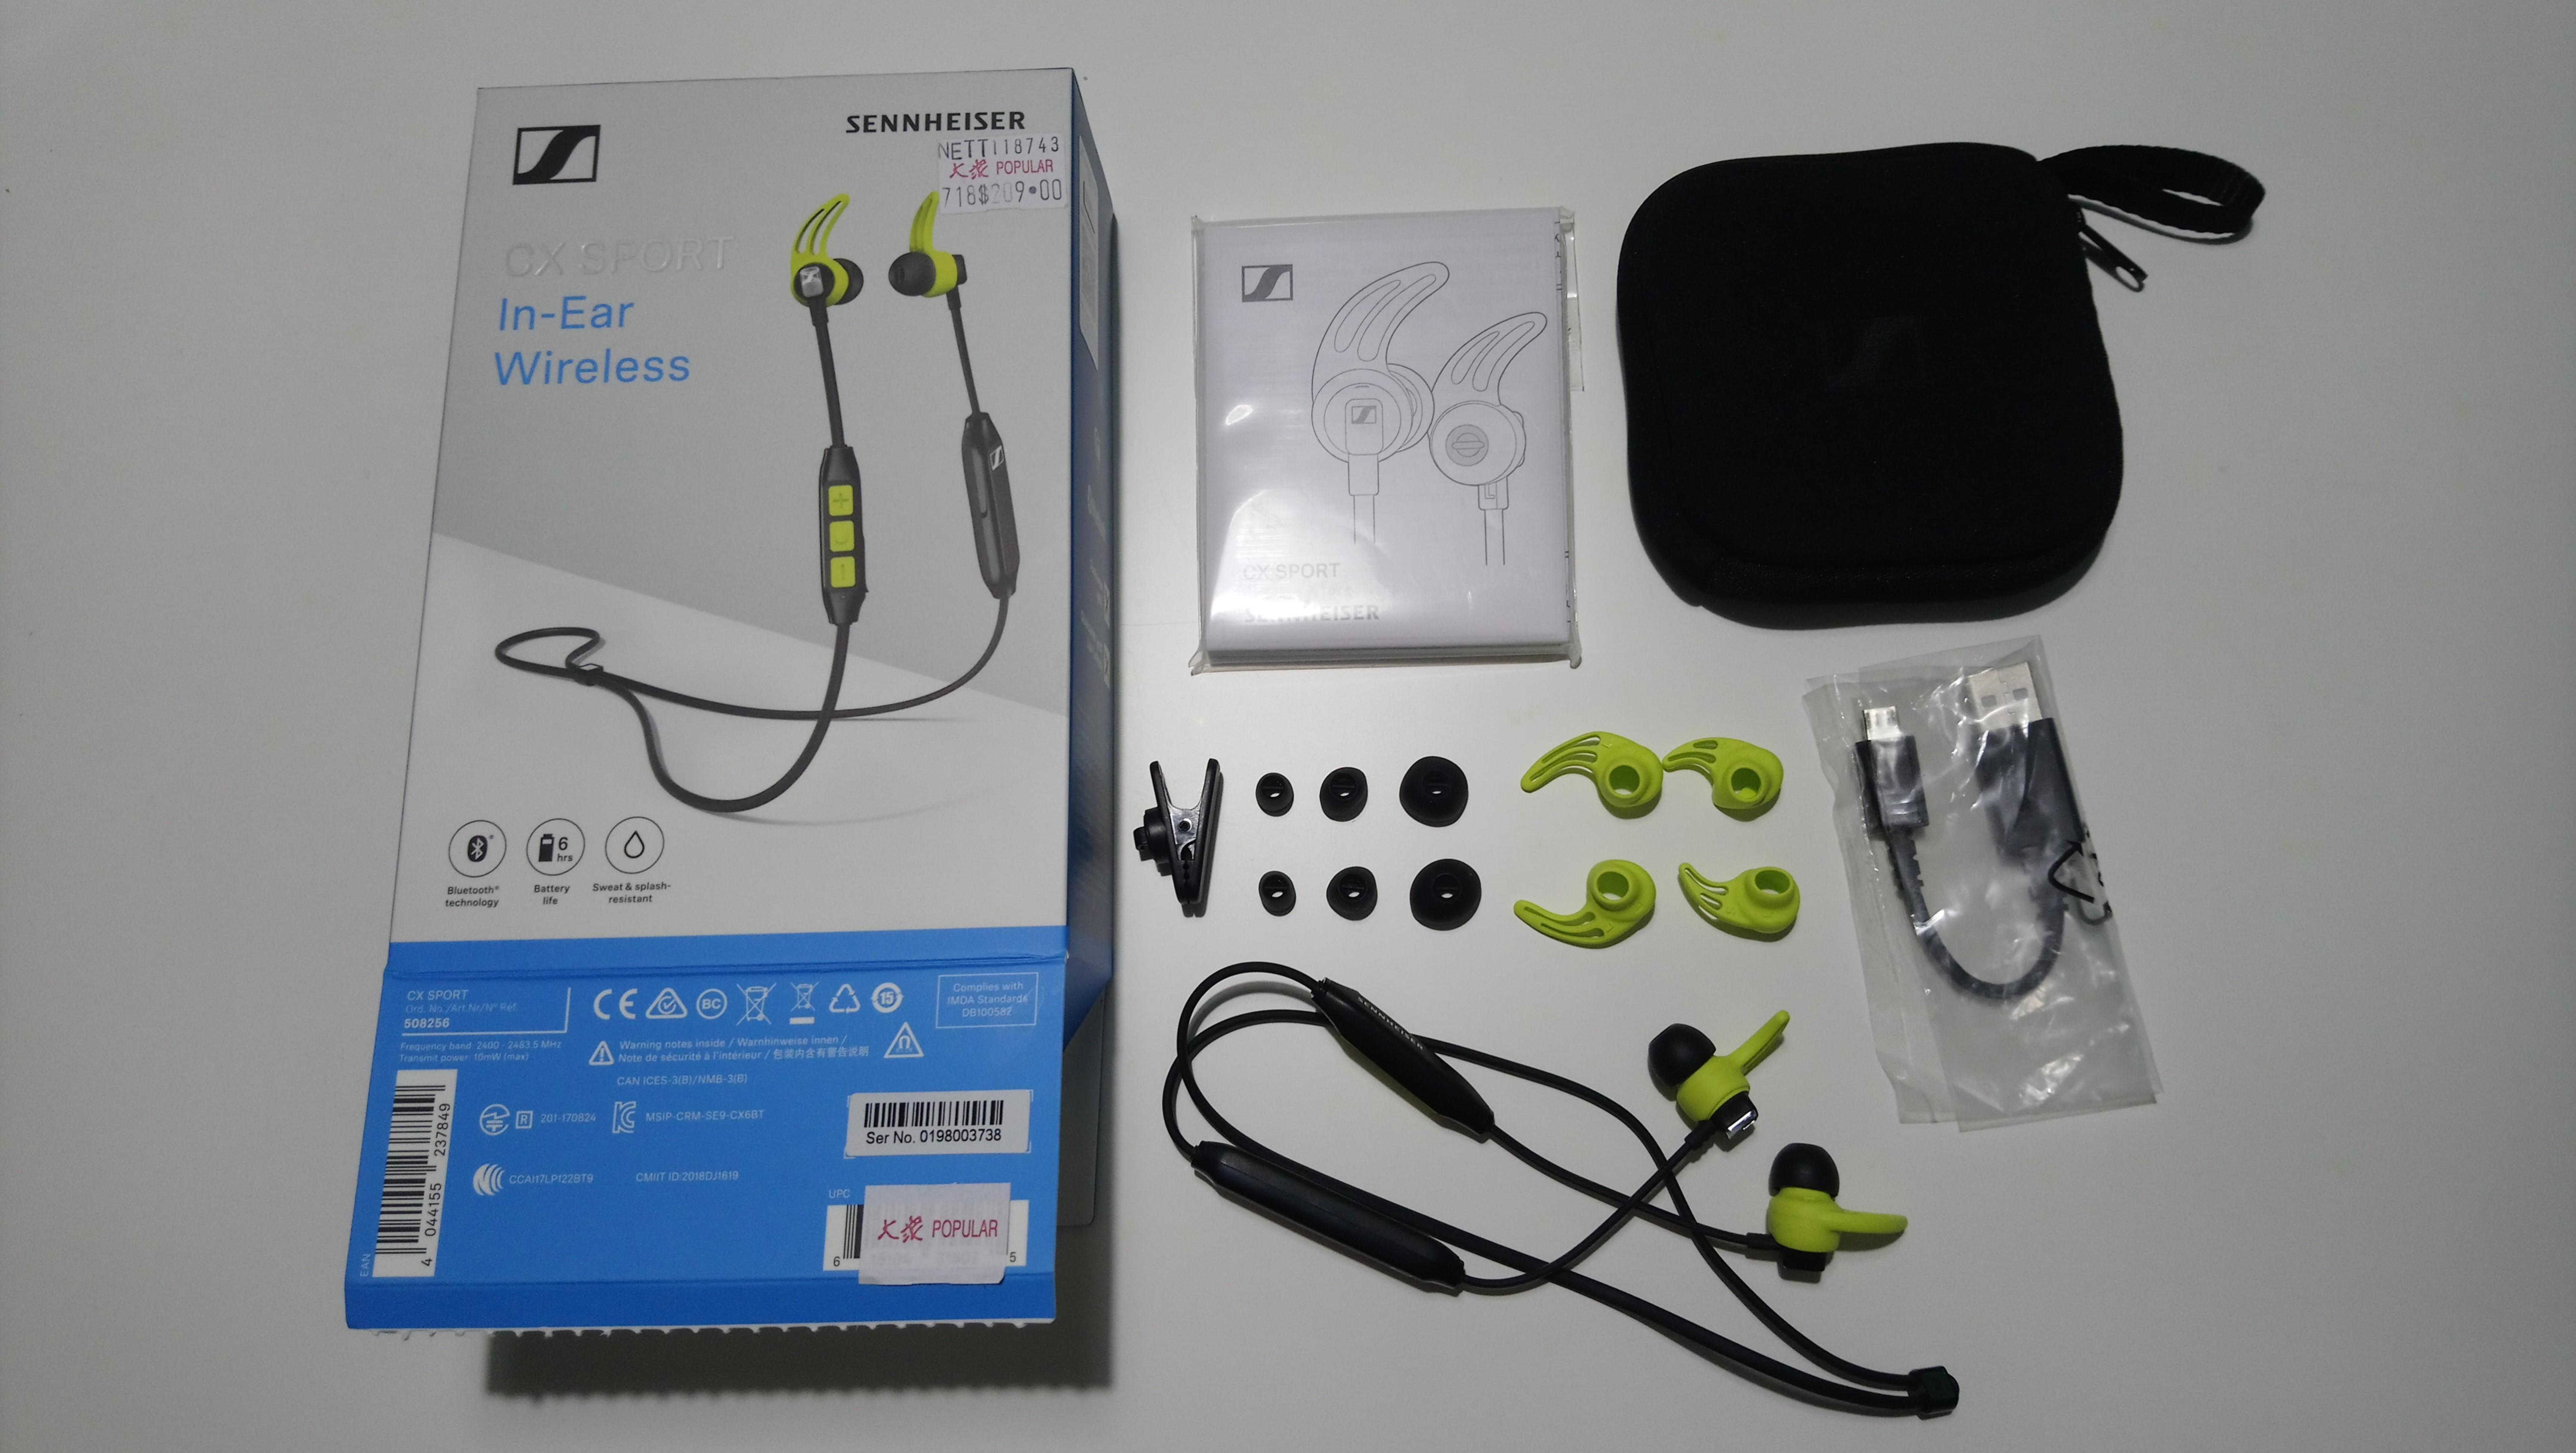 Sennheiser Cx Sport In Ear Wireless Pre Loved Electronics Audio On Carousell